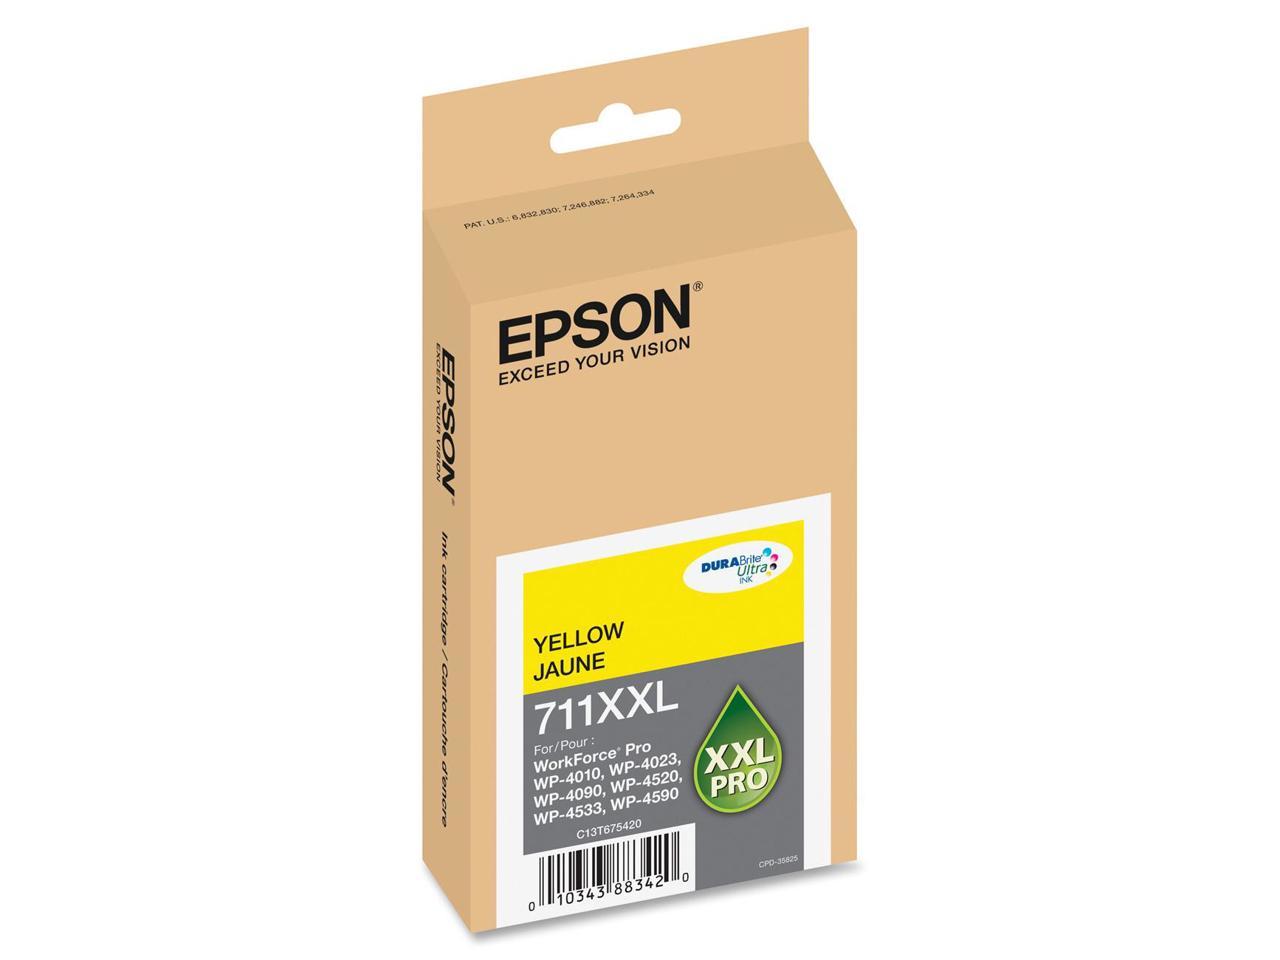 Epson DURABrite Ultra 711XXL Ink Cartridge - Yellow